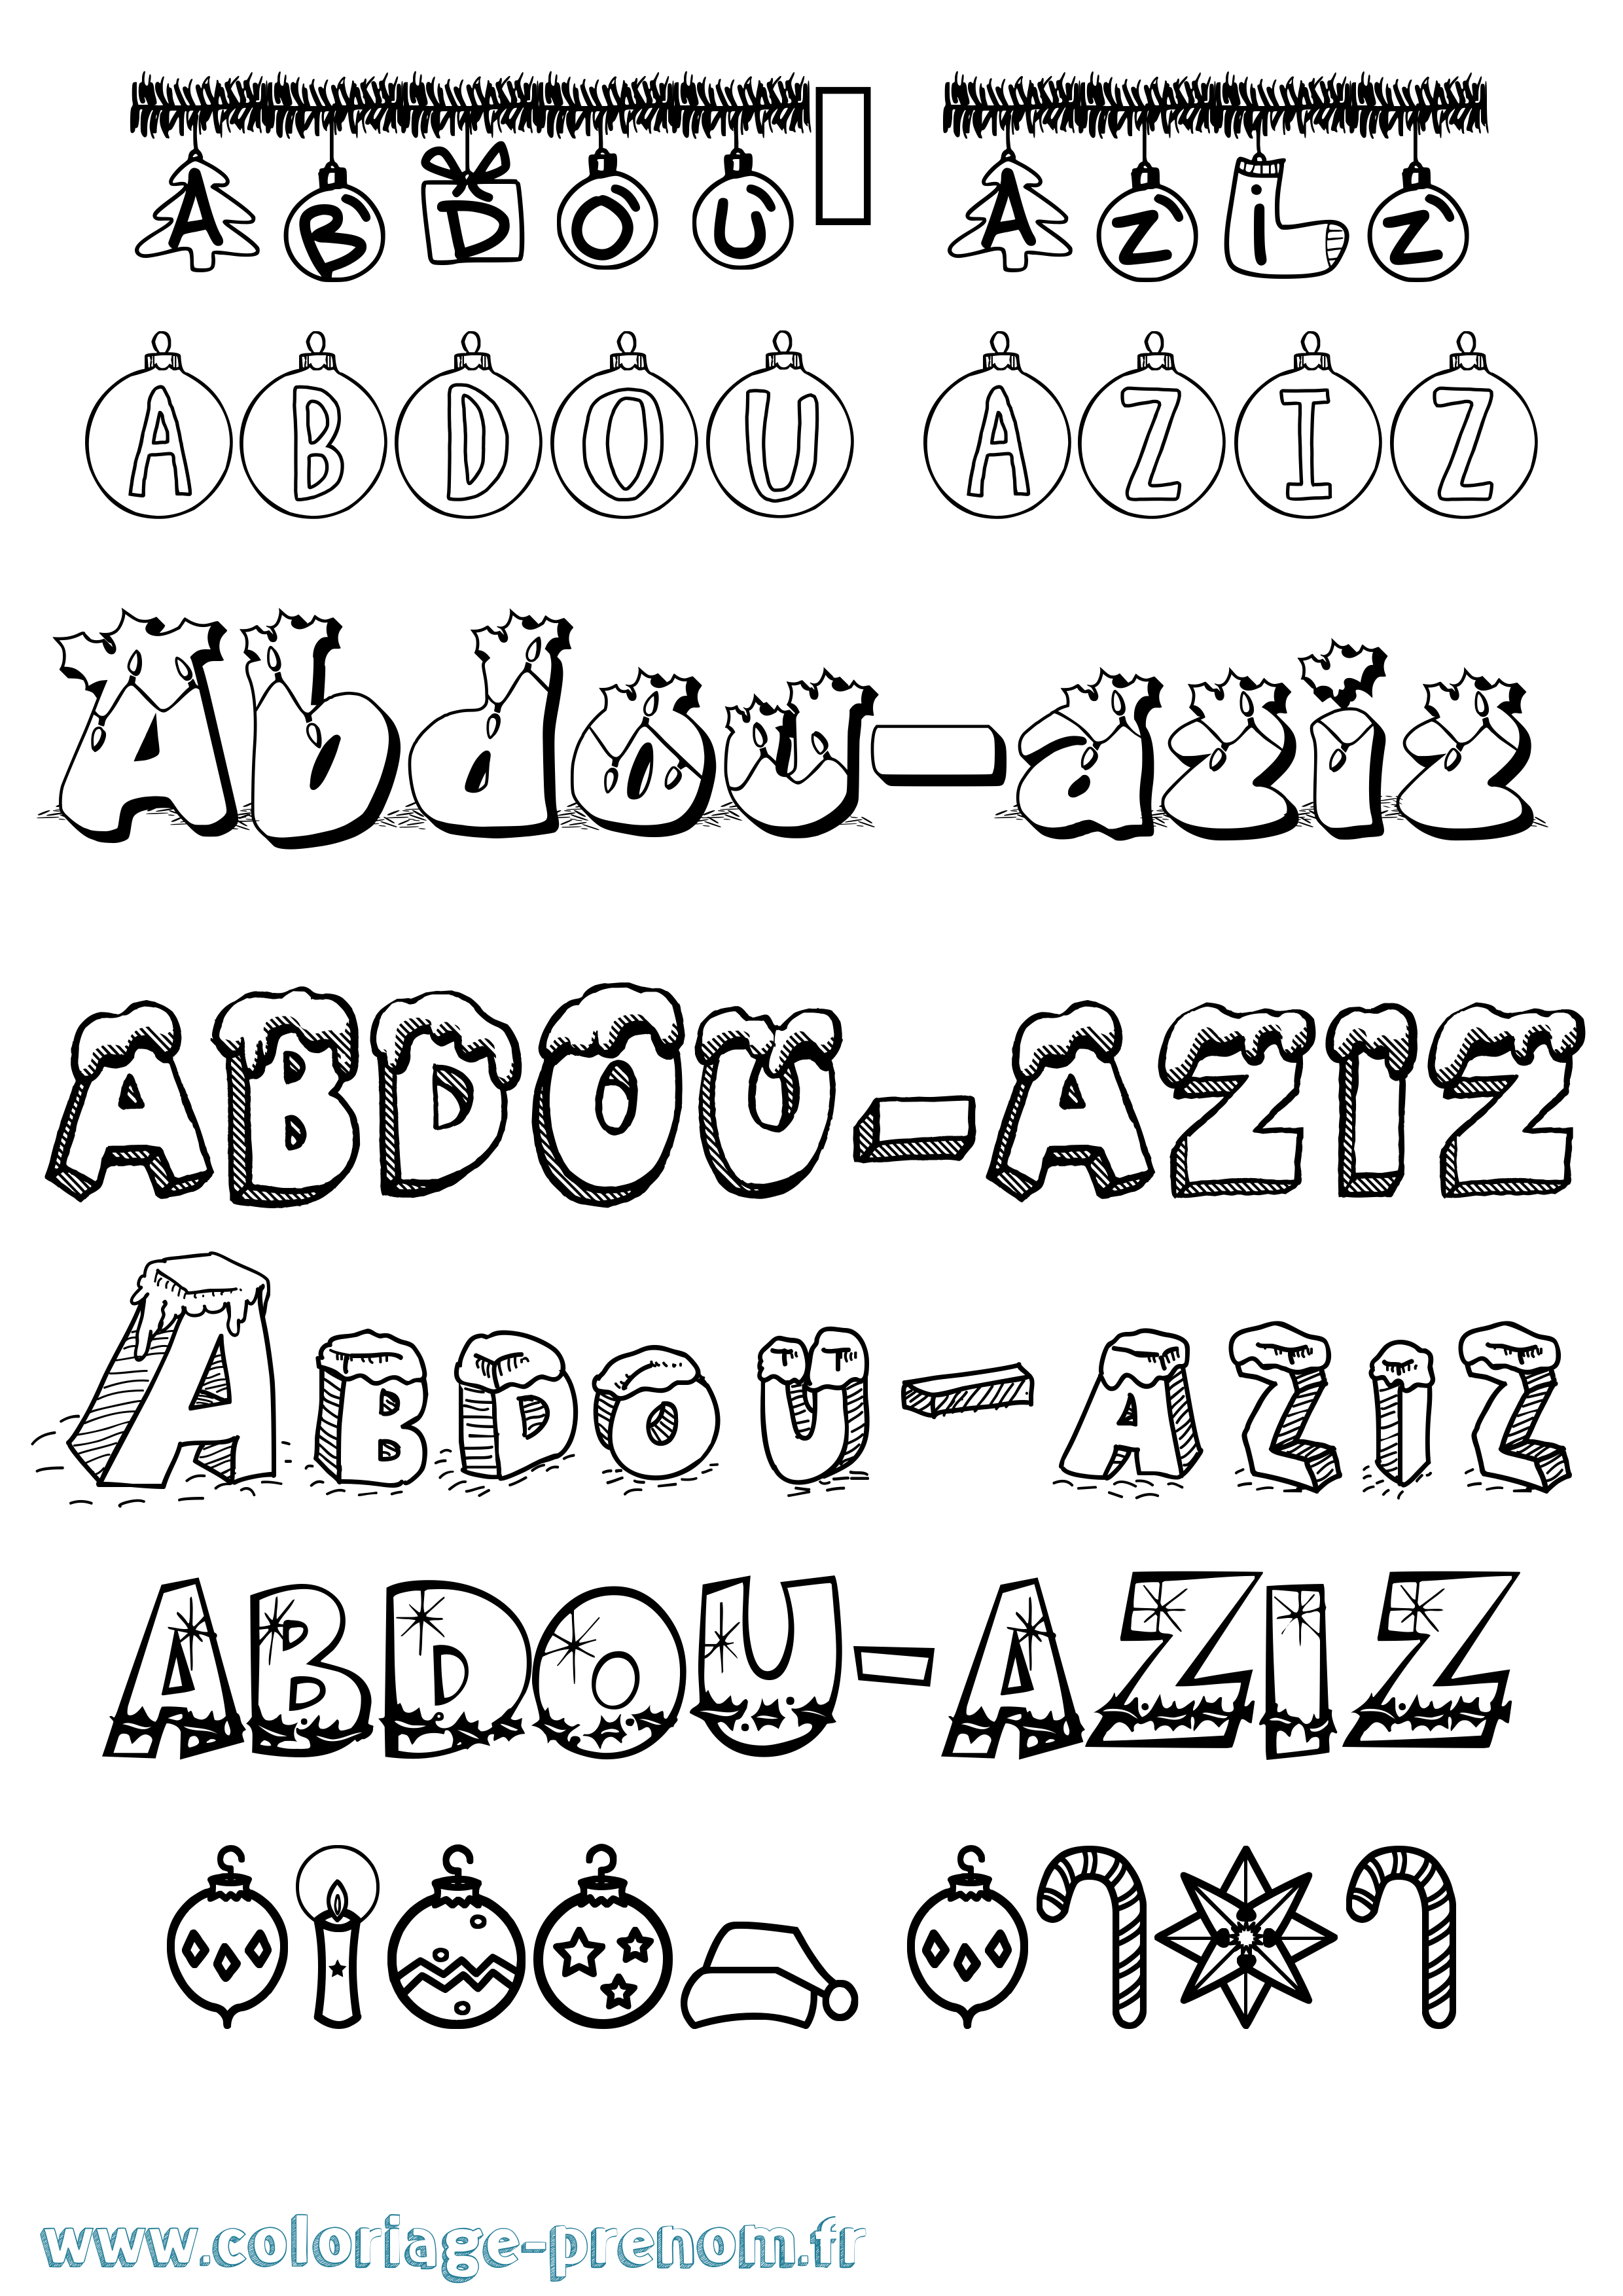 Coloriage prénom Abdou-Aziz Noël